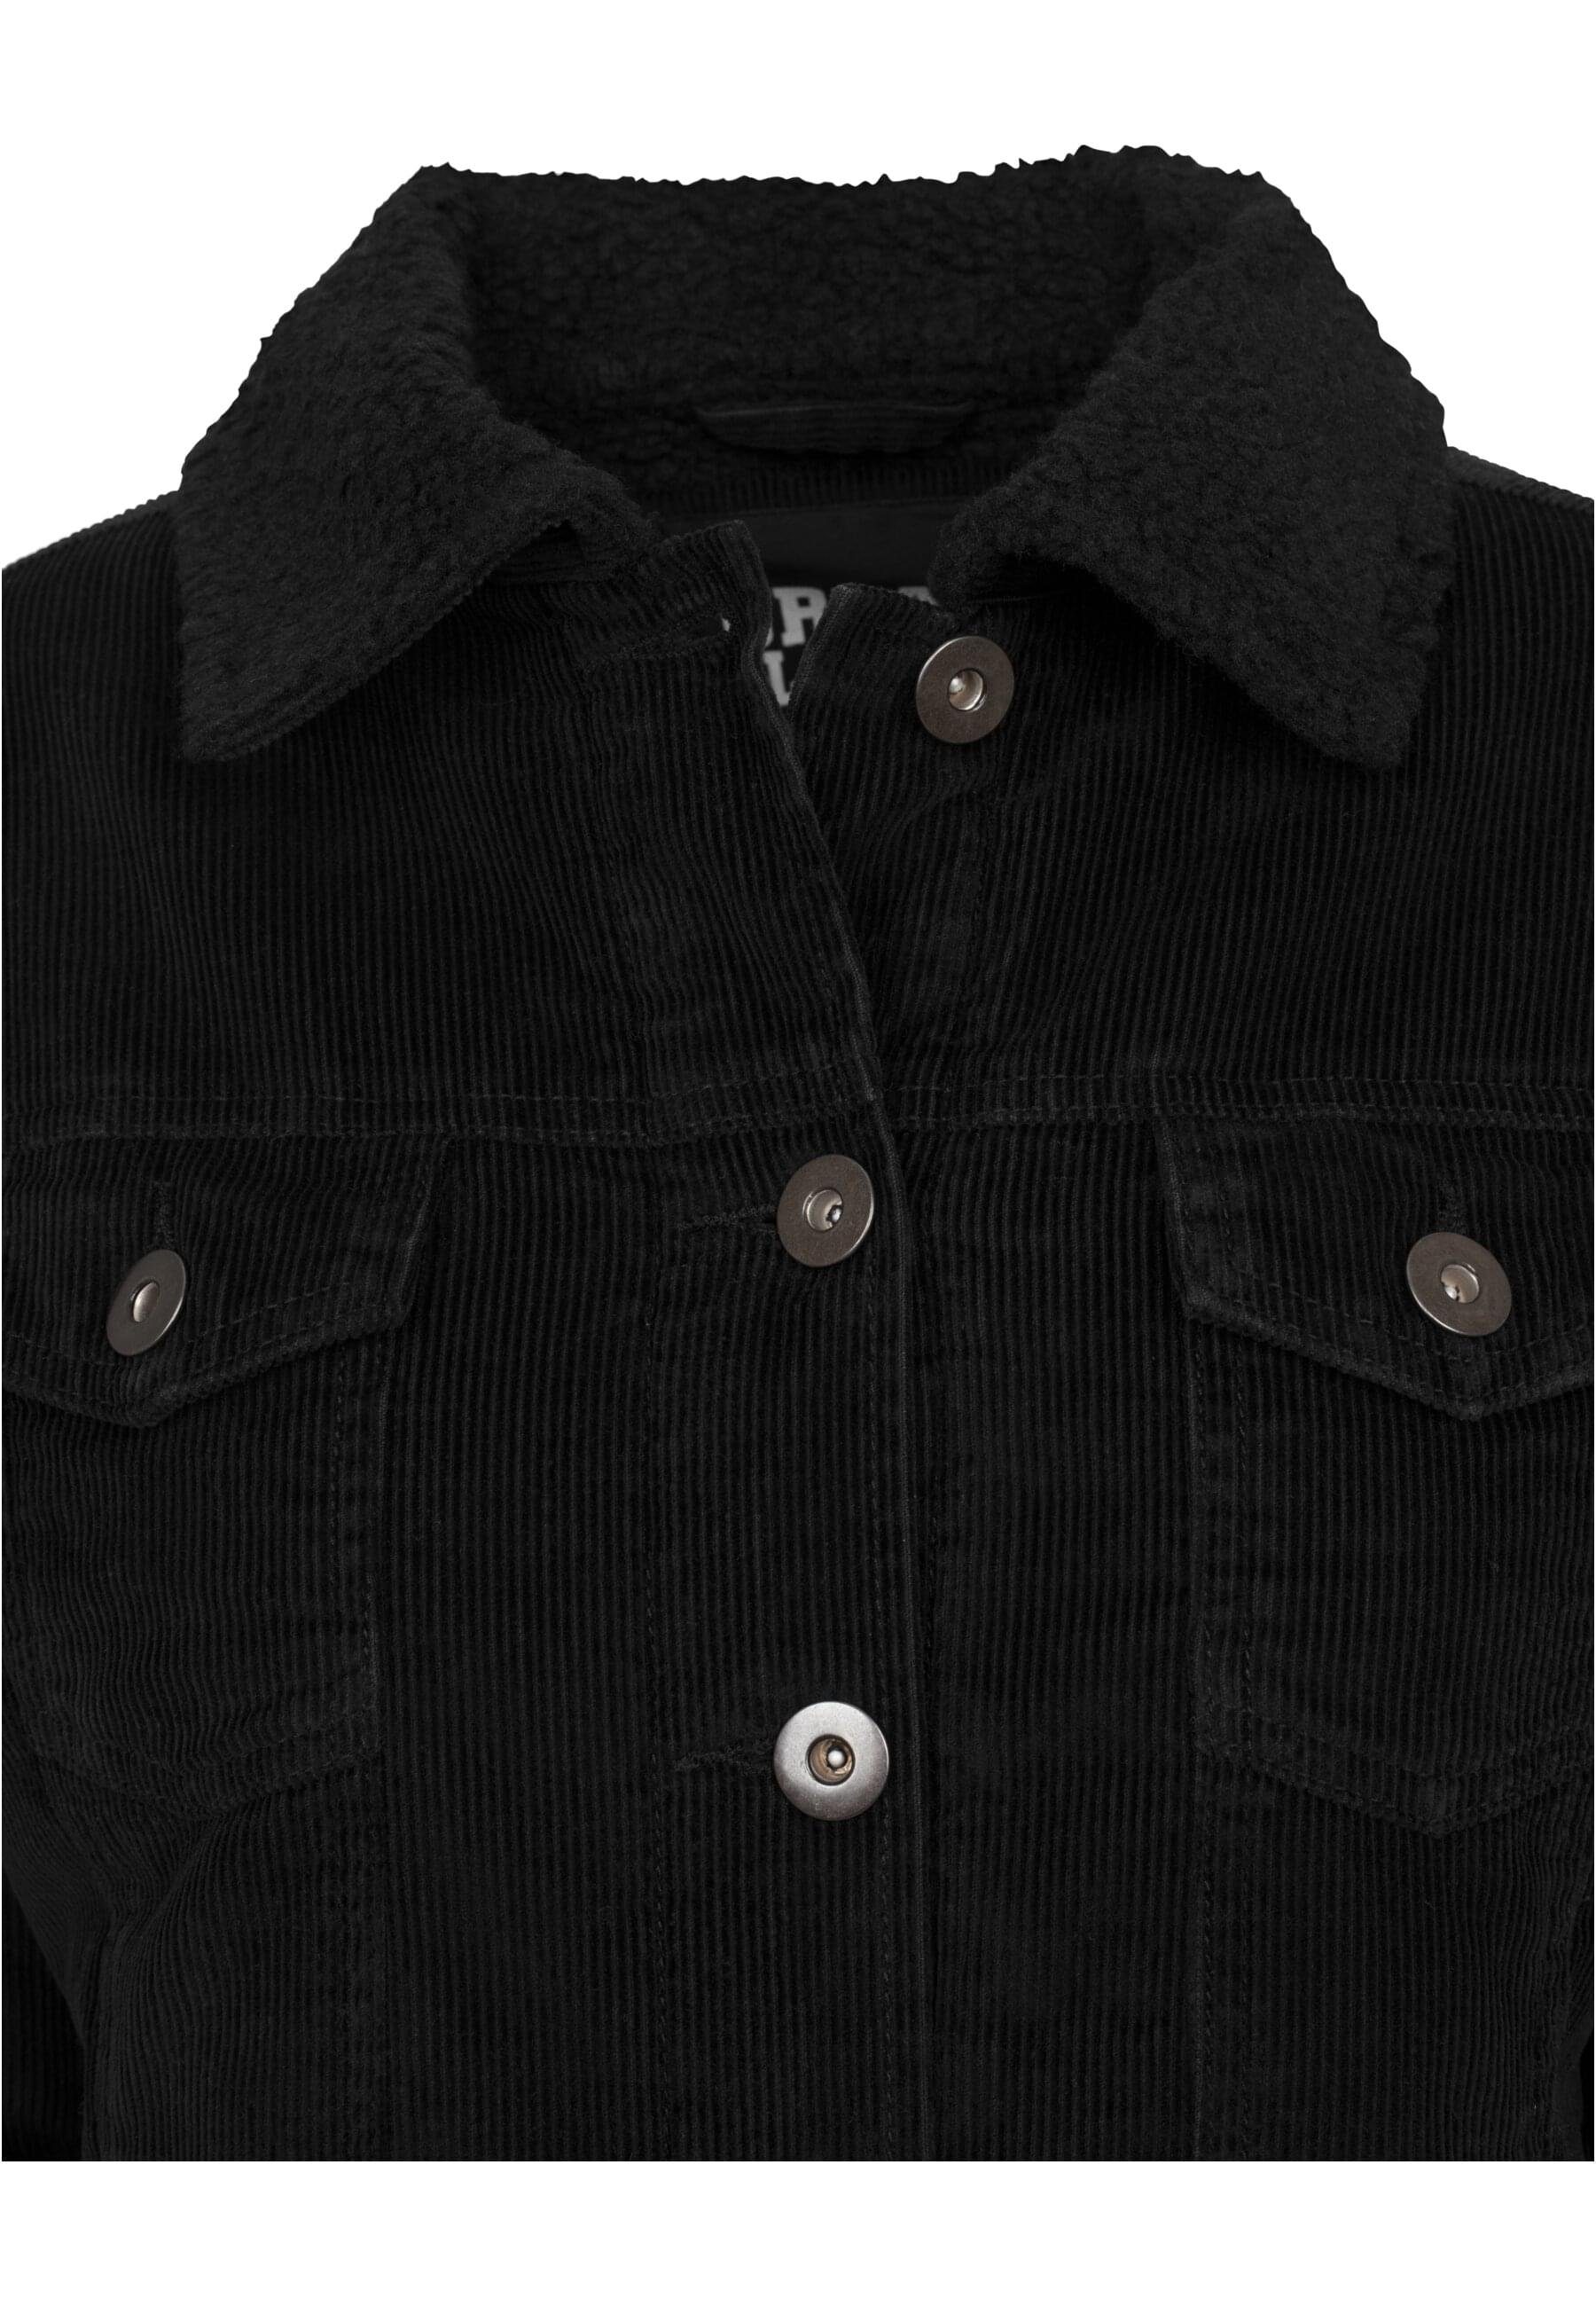 URBAN Jacket Ladies Corduroy Winterjacke Damen CLASSICS Sherpa black/black (1-St)